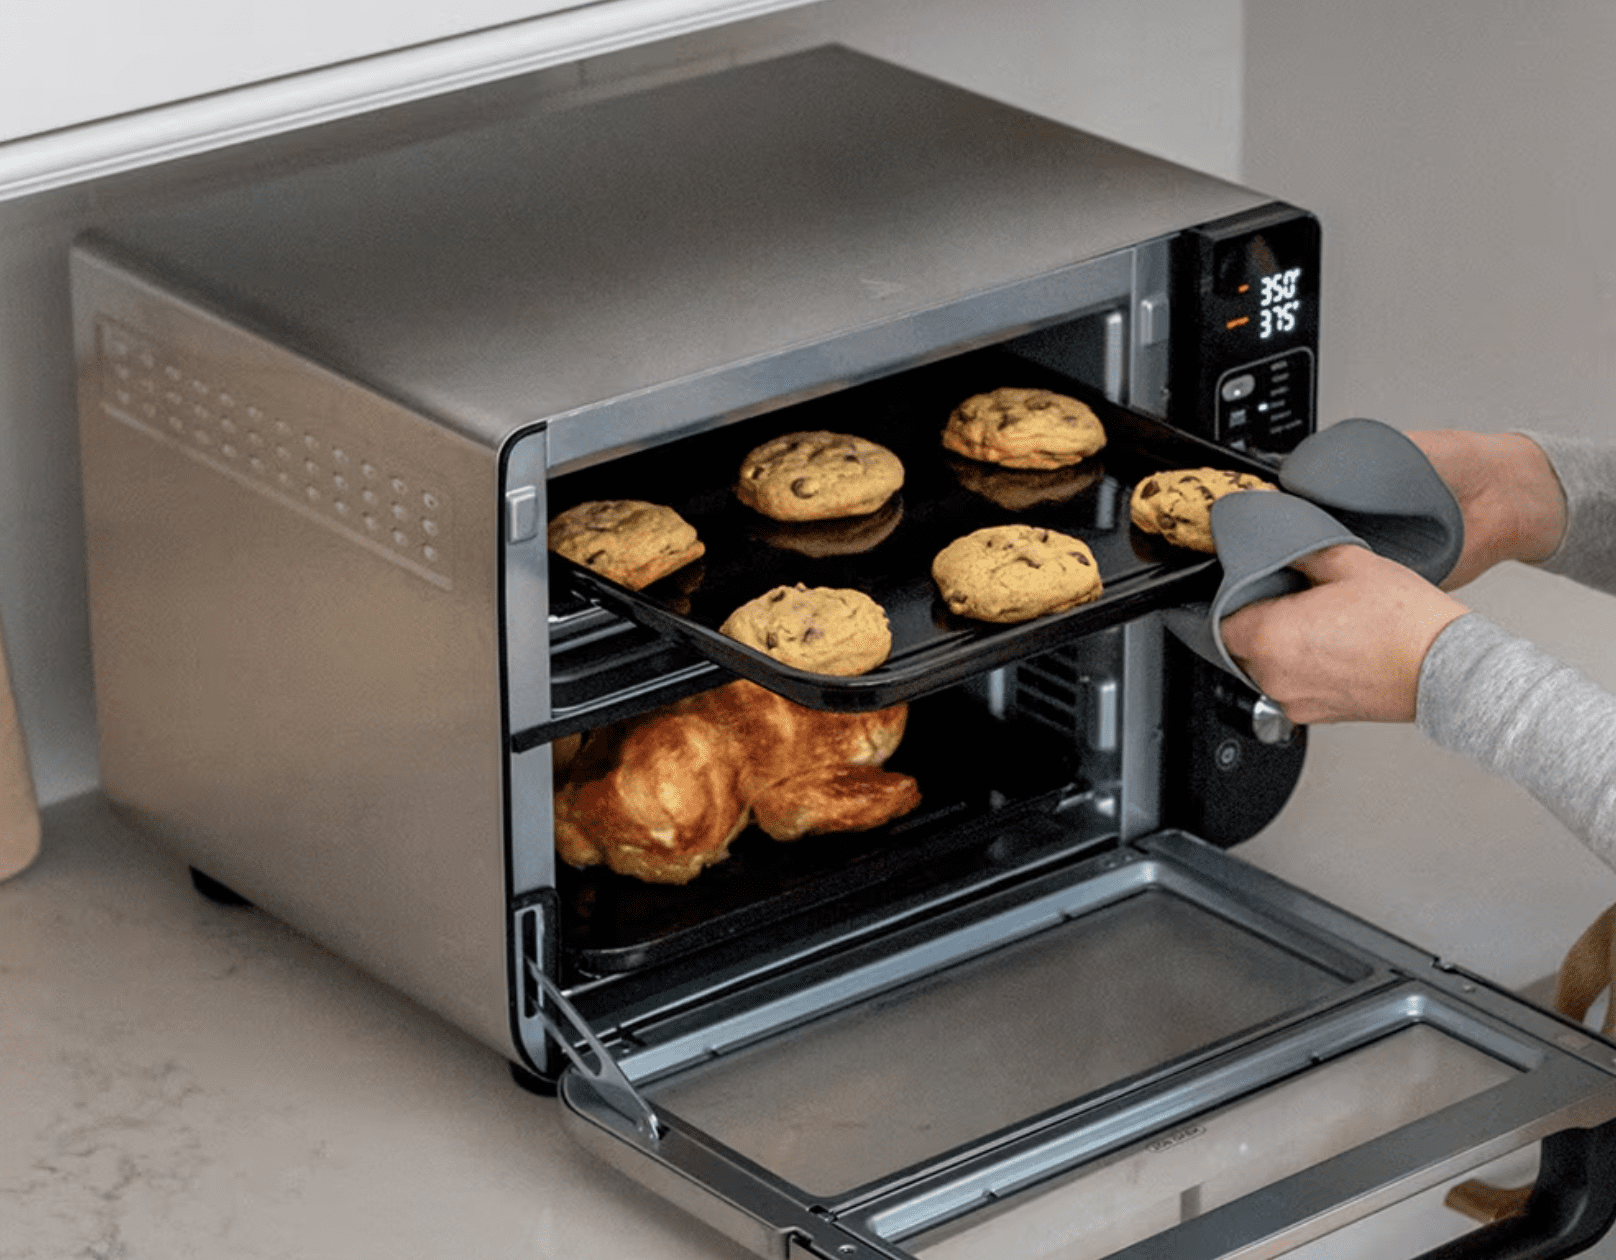 Ninja 12-in-1 Double Oven with FlexDoor and Recipe Guide